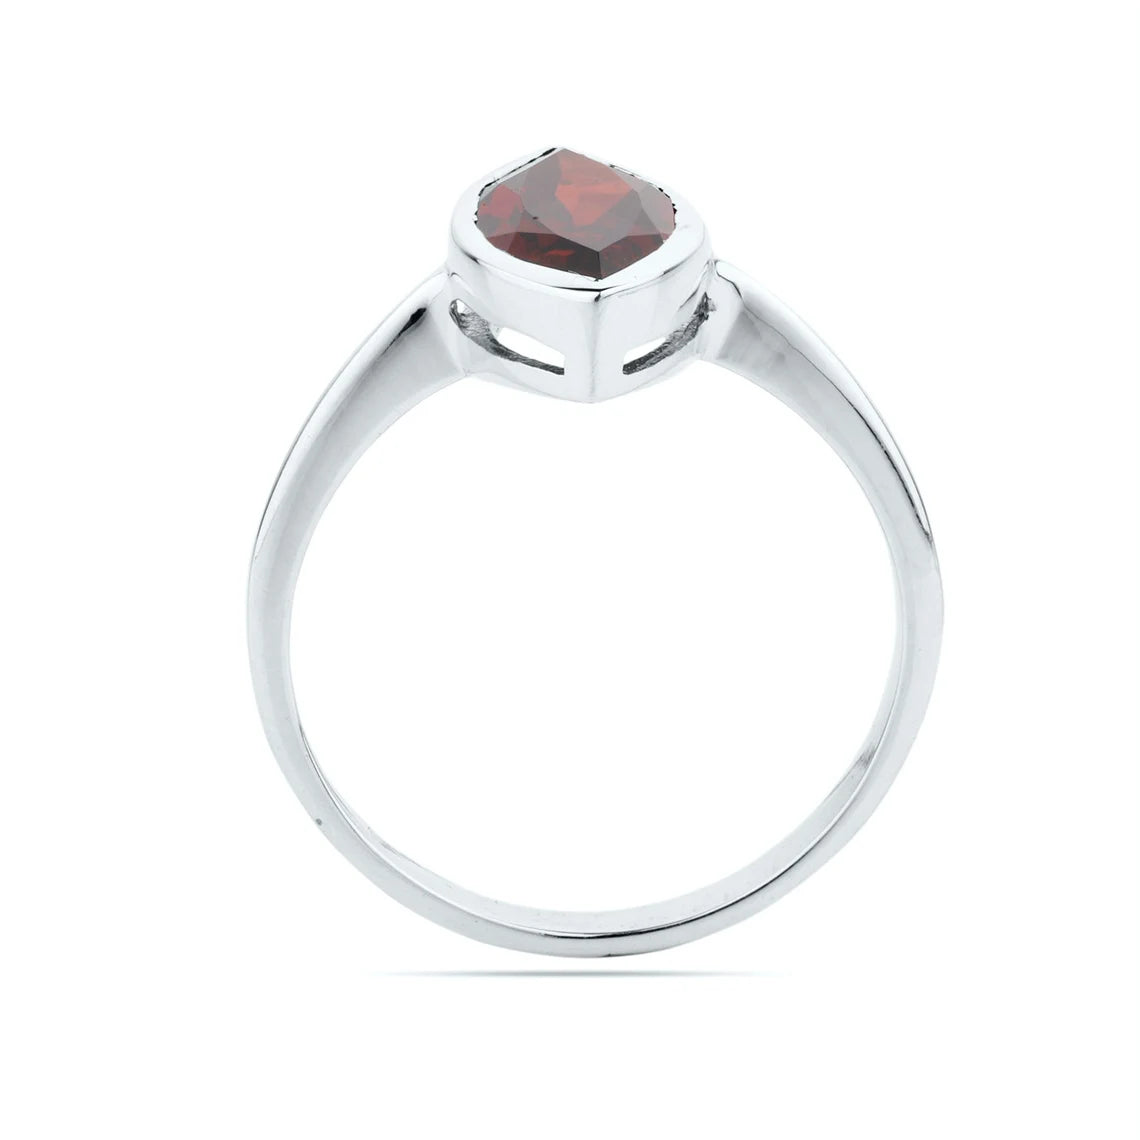 Garnet Marquise Ring, January Birthstone Garnet Ring, 925 Sterling Silver Garnet Gemstone Ring Handmade